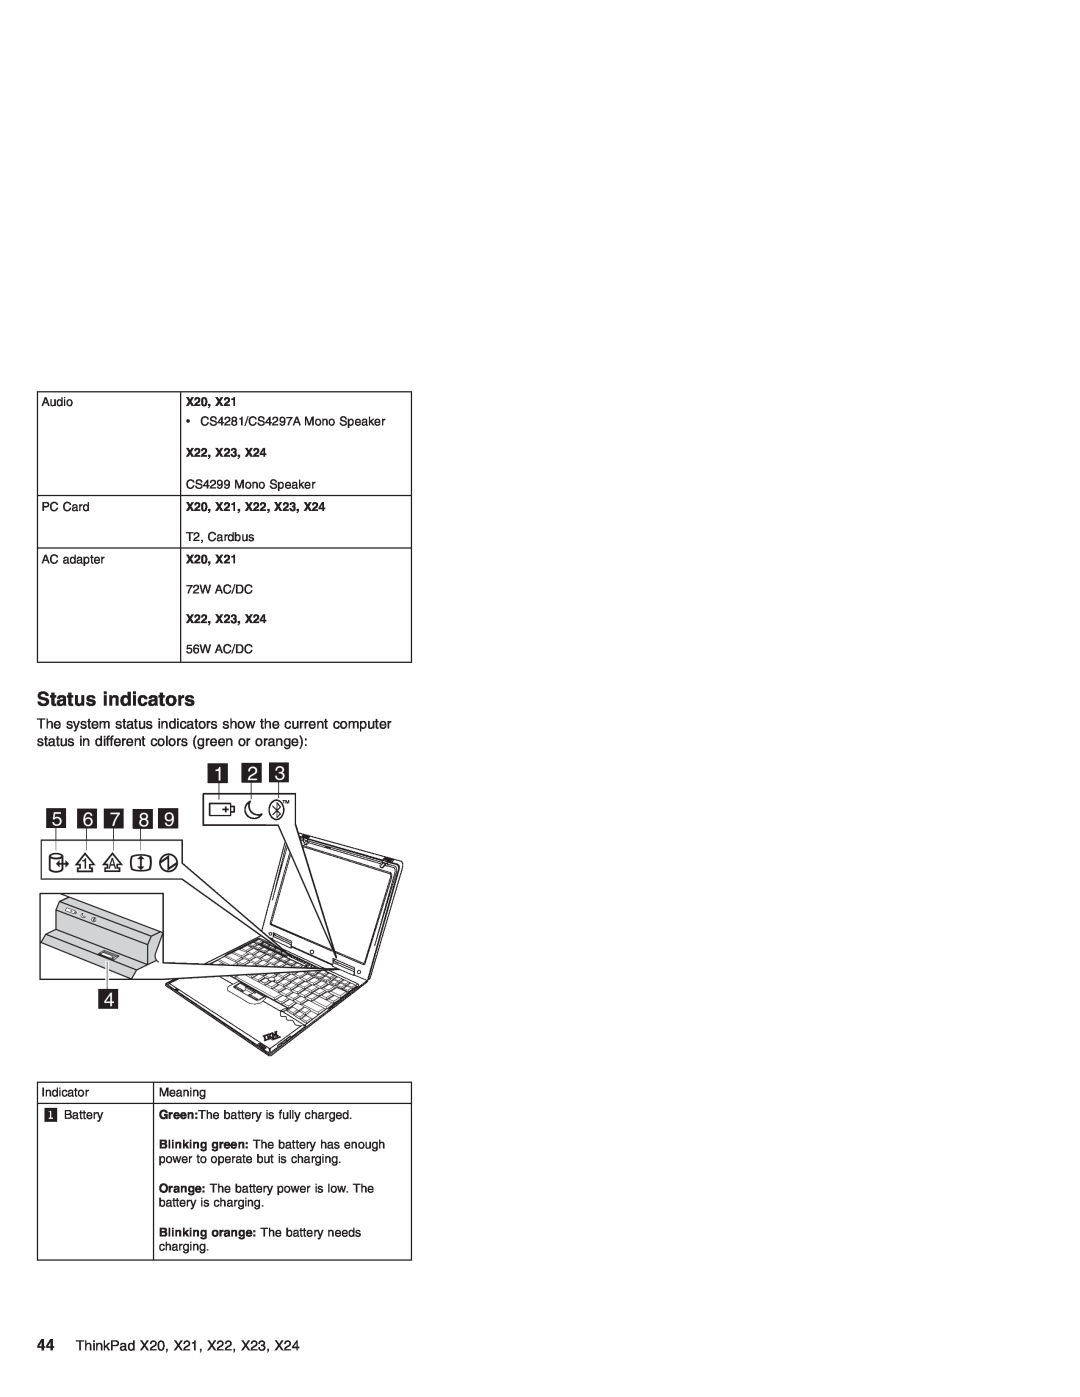 IBM X24 manual Status indicators, ThinkPad X20, X21, X22, X23 